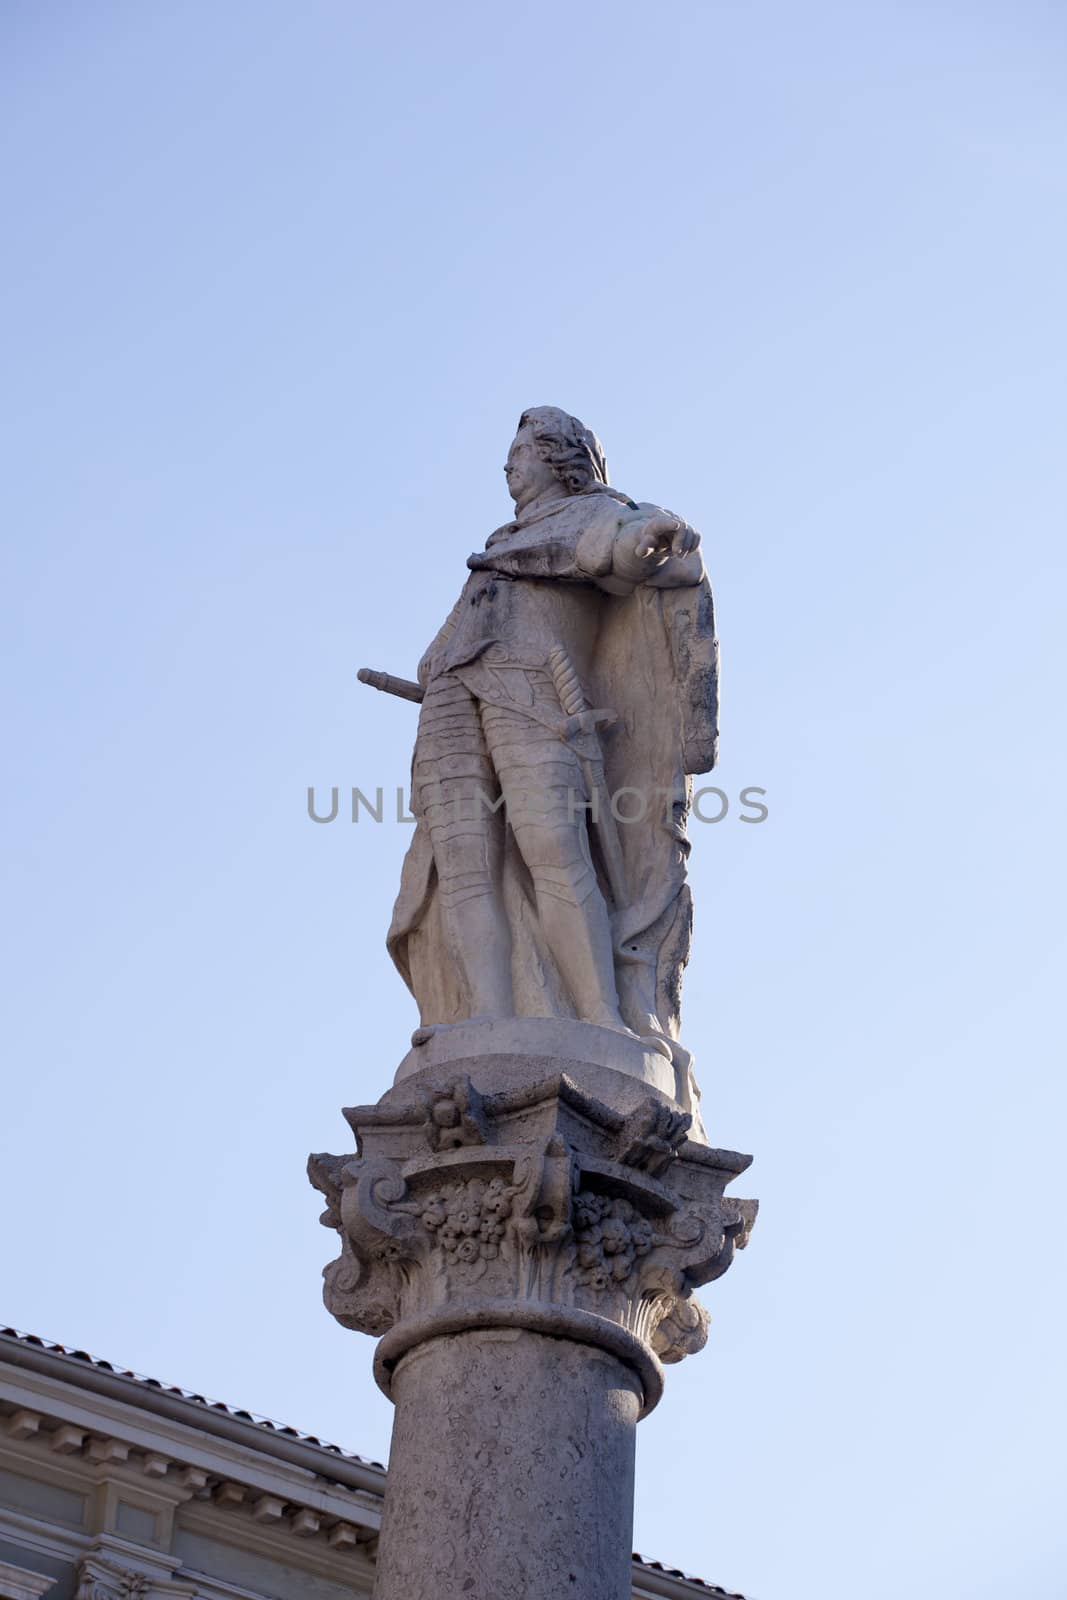 Carlo VI monument, Trieste by bepsimage